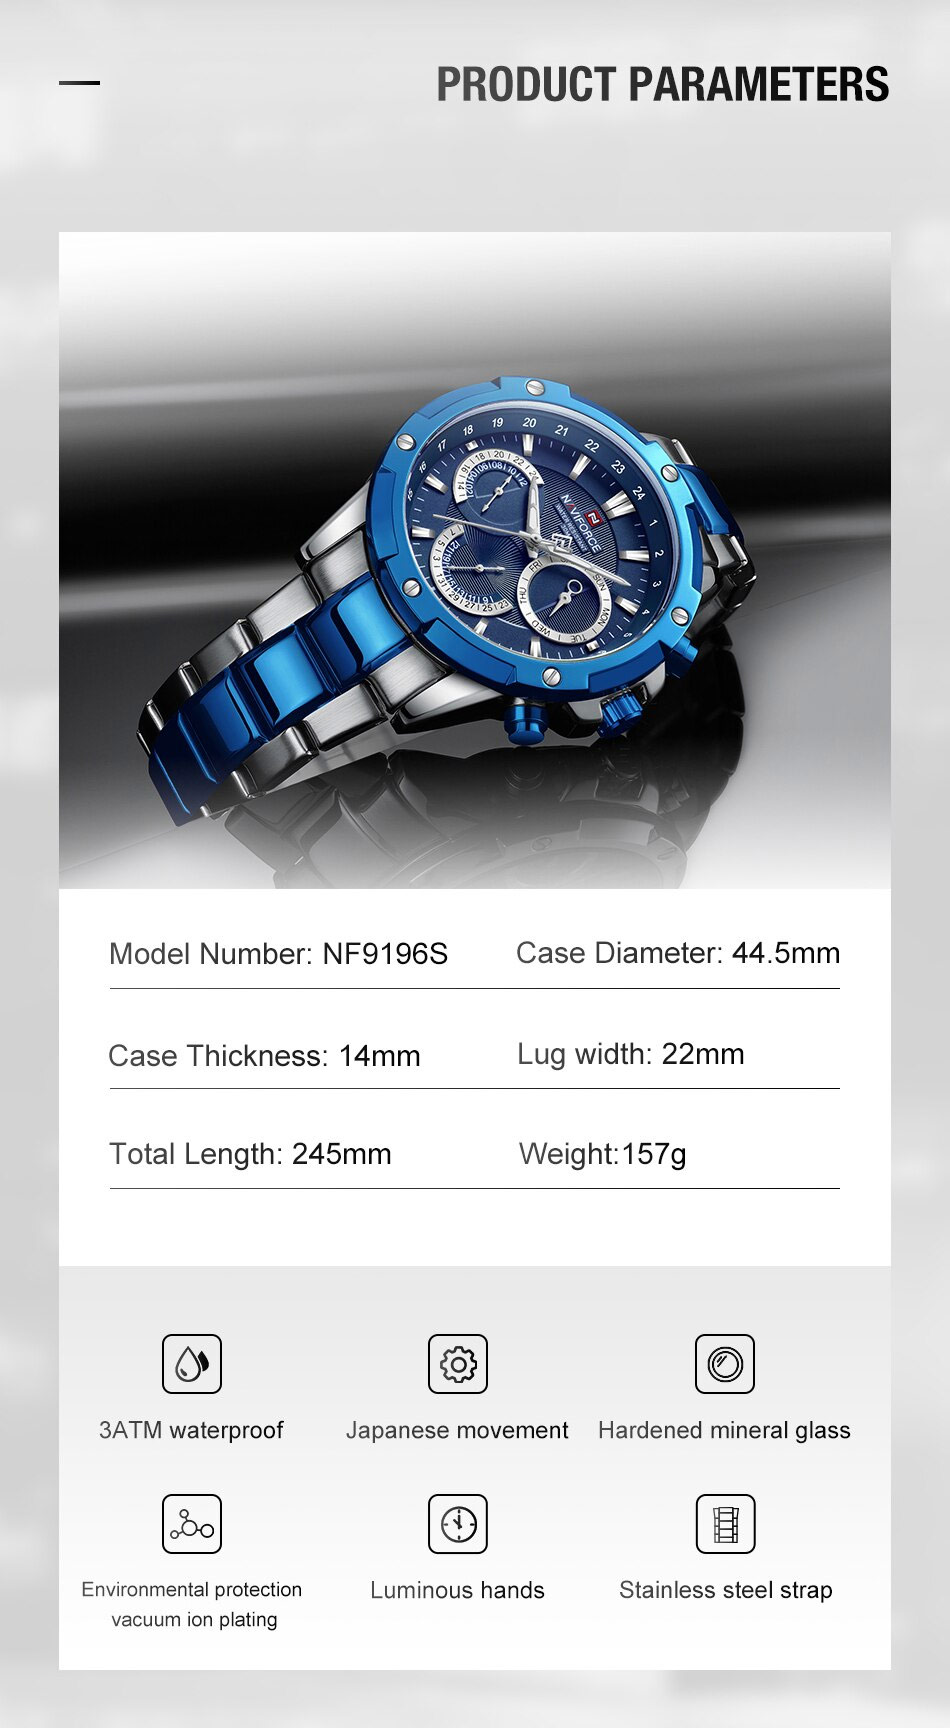 NaviForce-NF9196S men's luxury wrist watch specifications